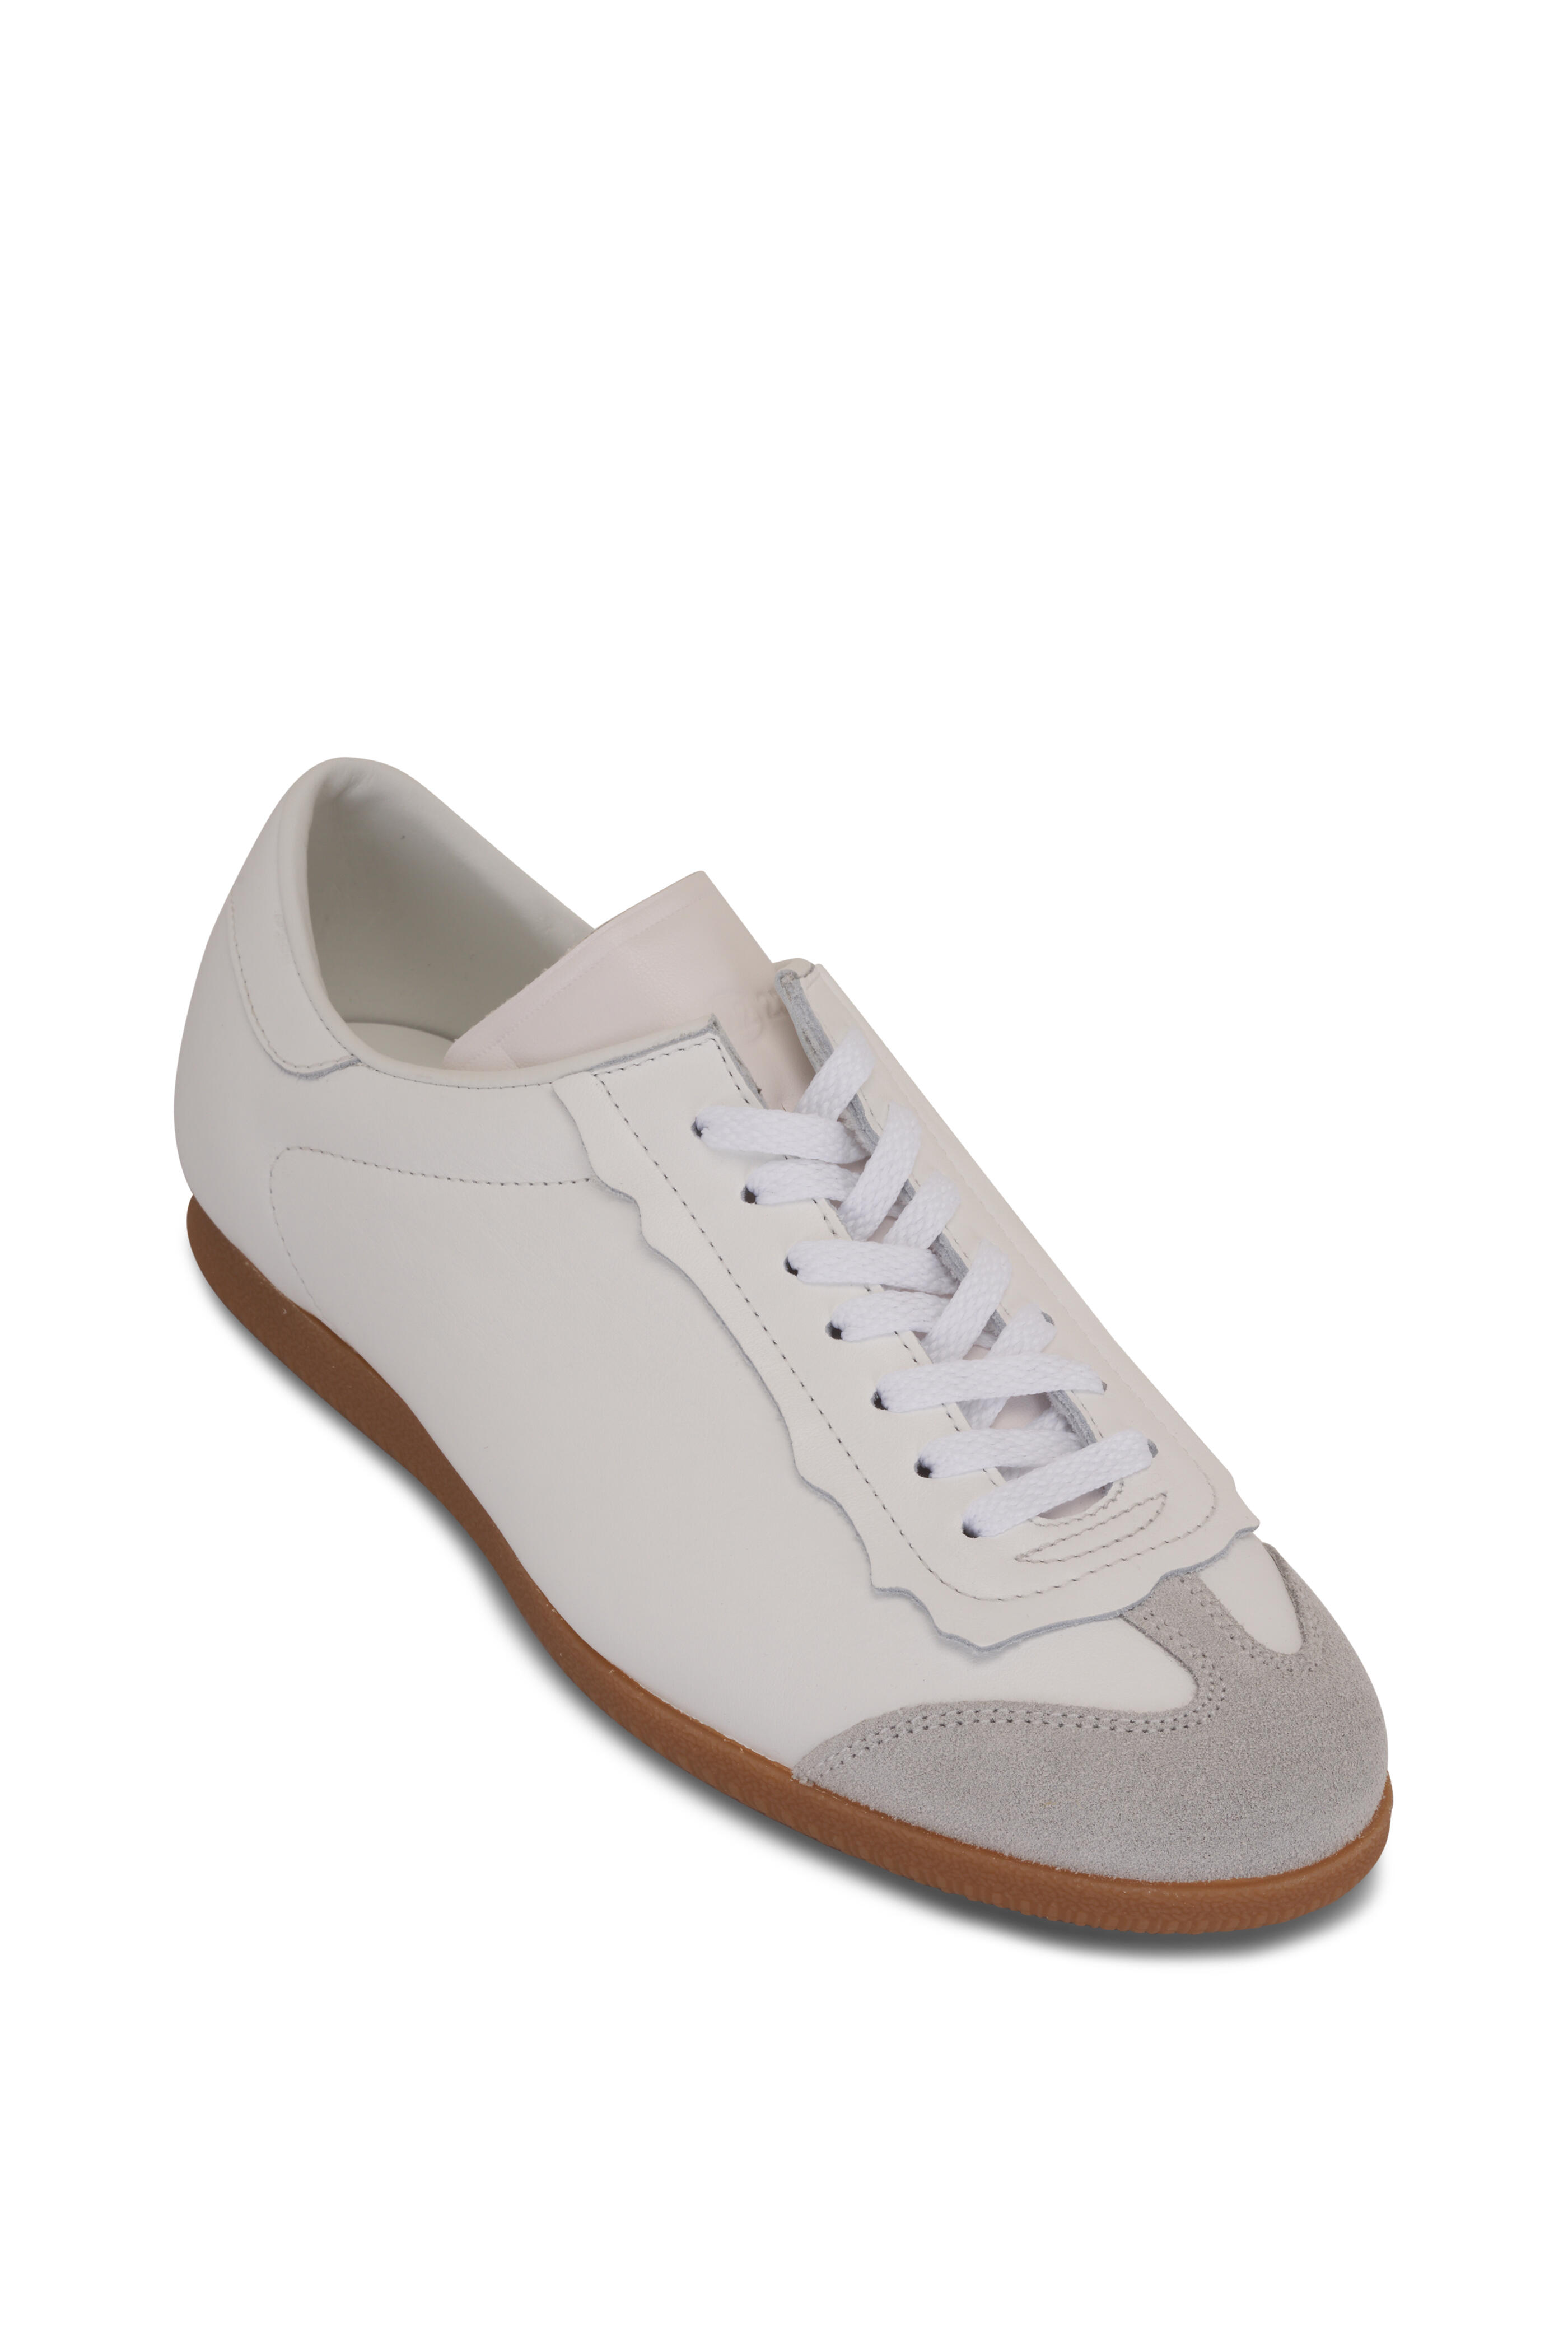 Maison Margiela - Featherlight White Suede & Leather Sneaker